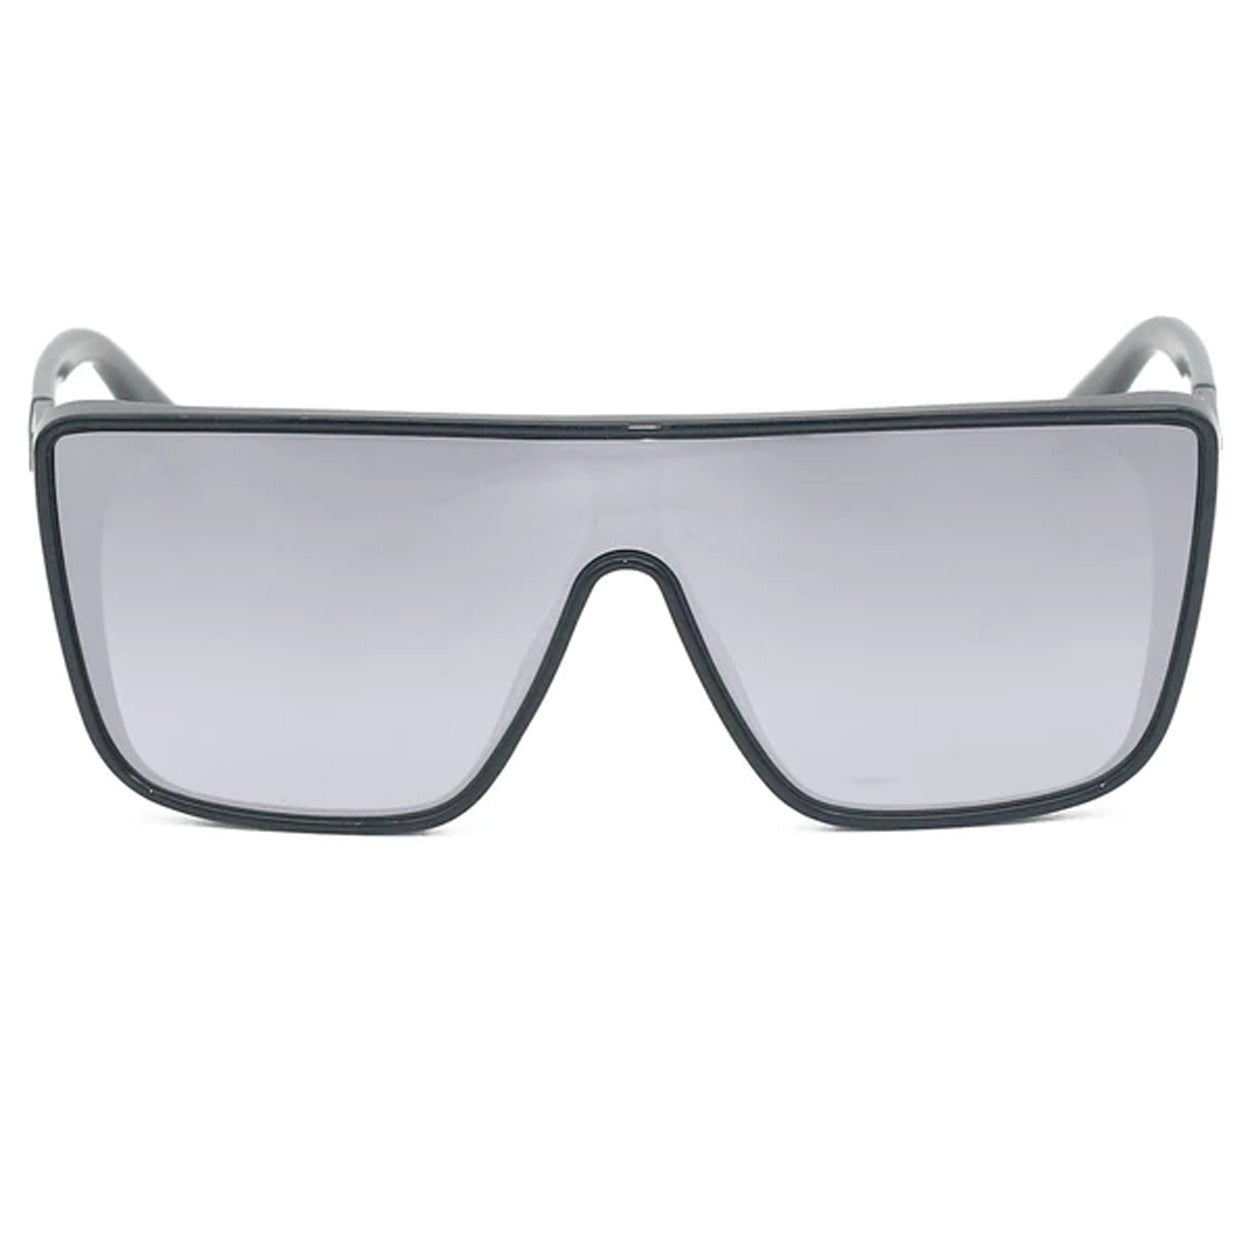 Details more than 175 fleek sunglasses best